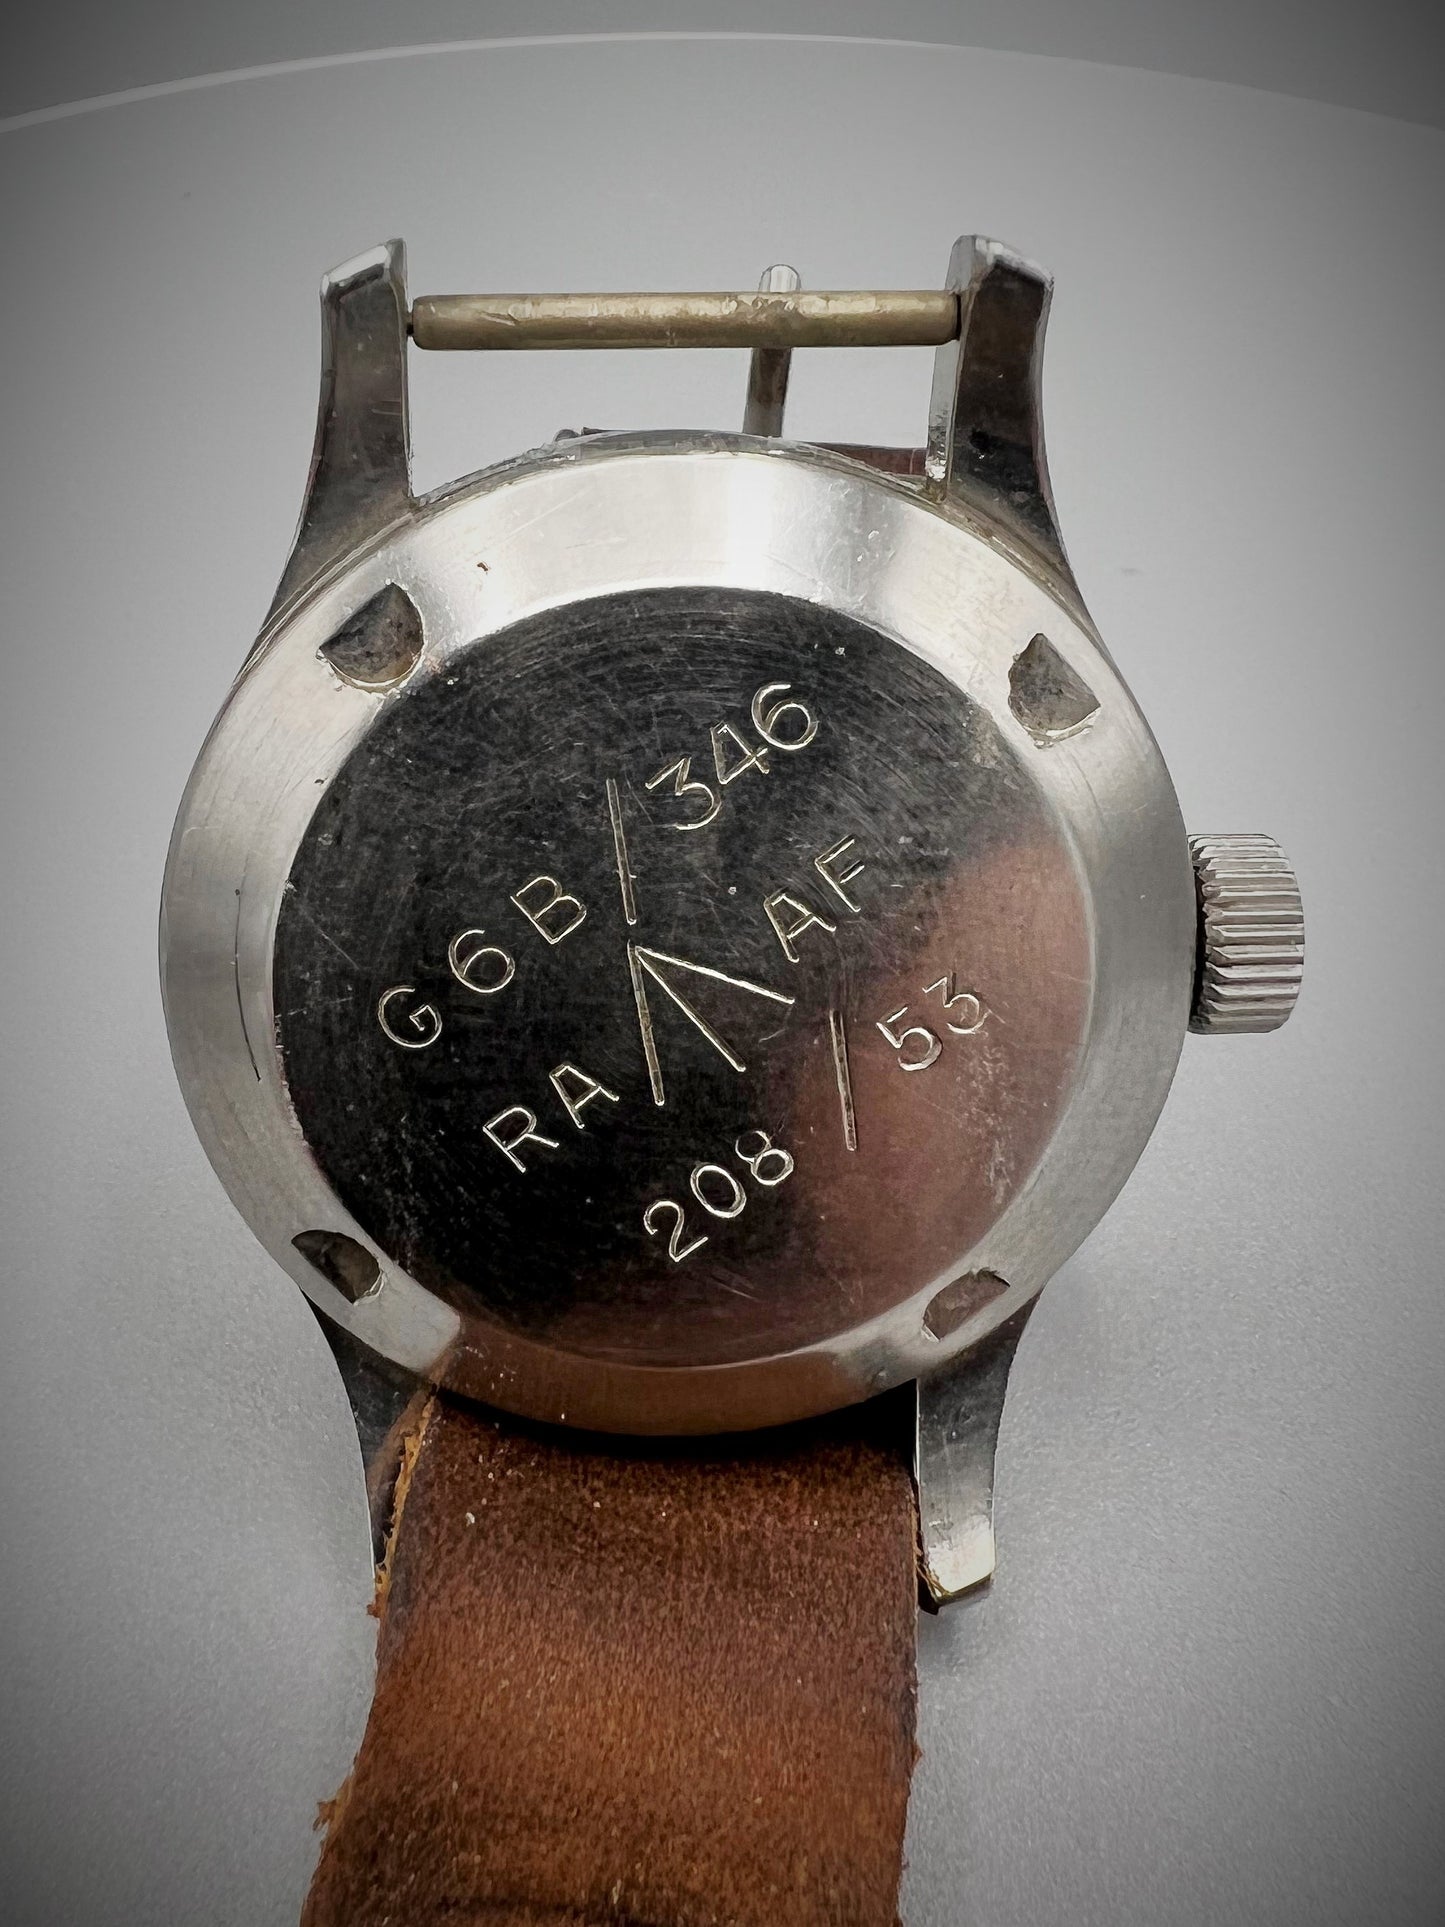 Jaeger LeCoultre Mark 11, Rare So Called “White Twelve” Dial, RAAF, 1955